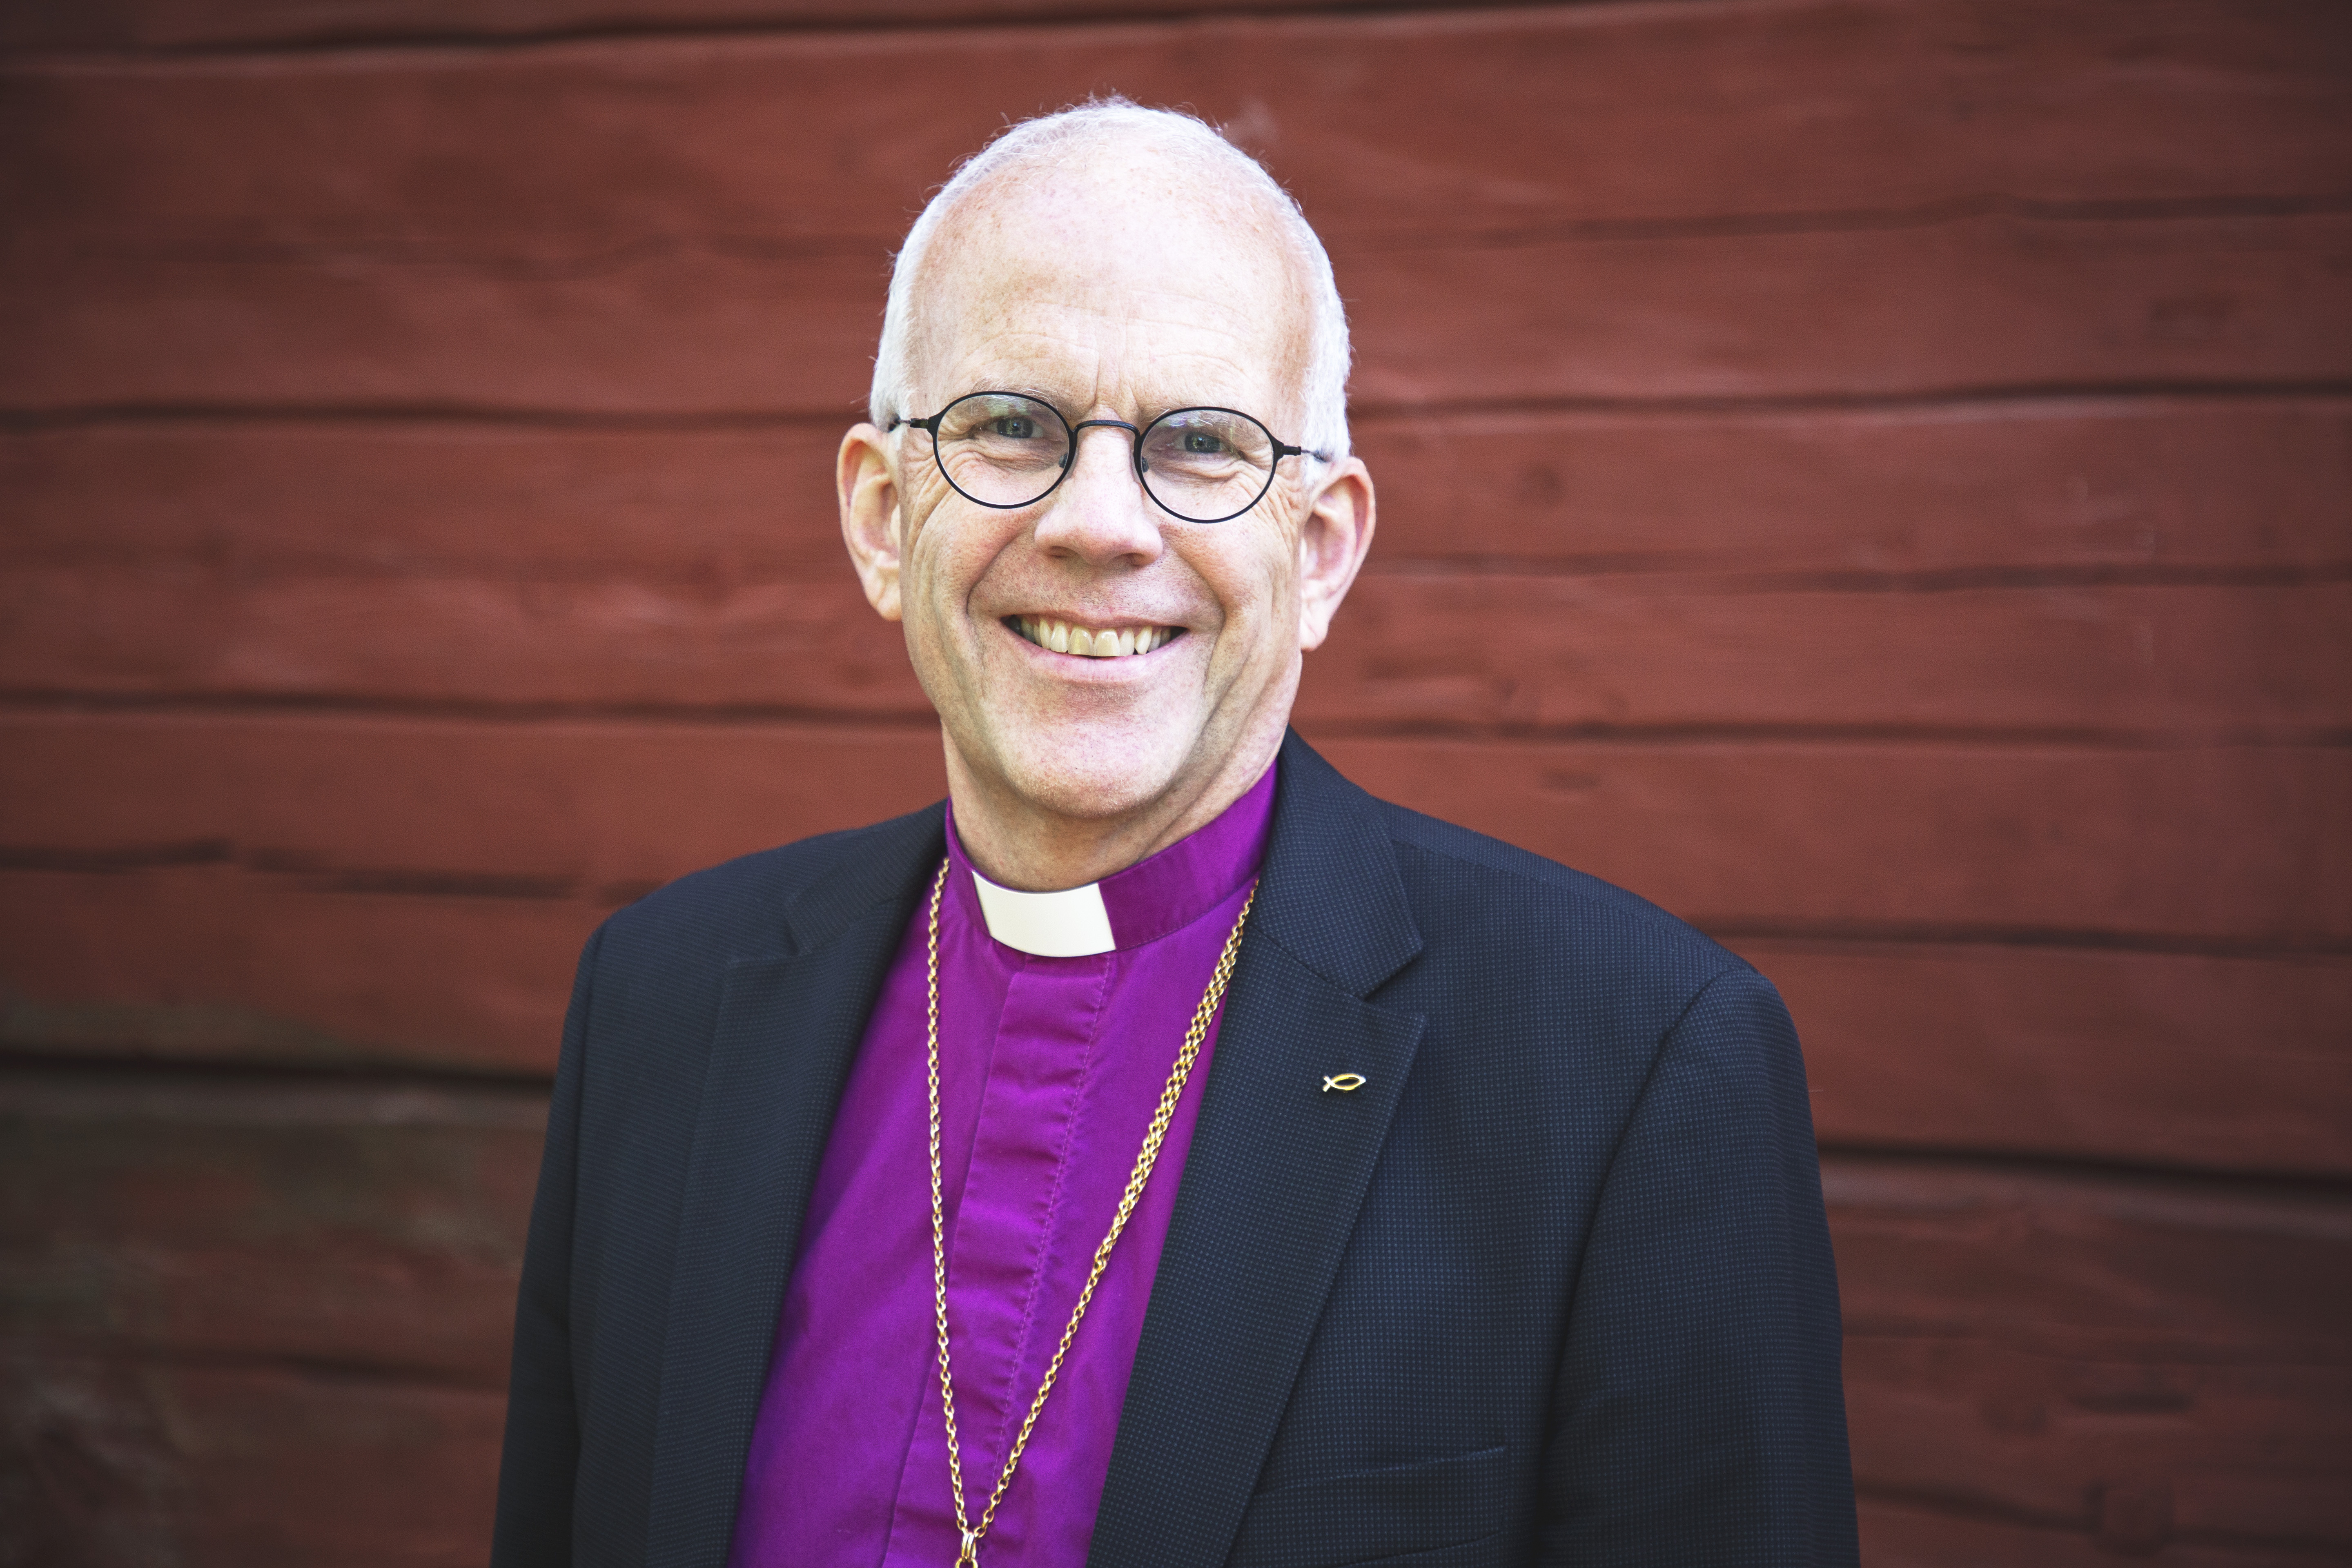 VALGT: Biskop i Linköpings stift, Martin Modéus, blir Sveriges neste erkebiskop.